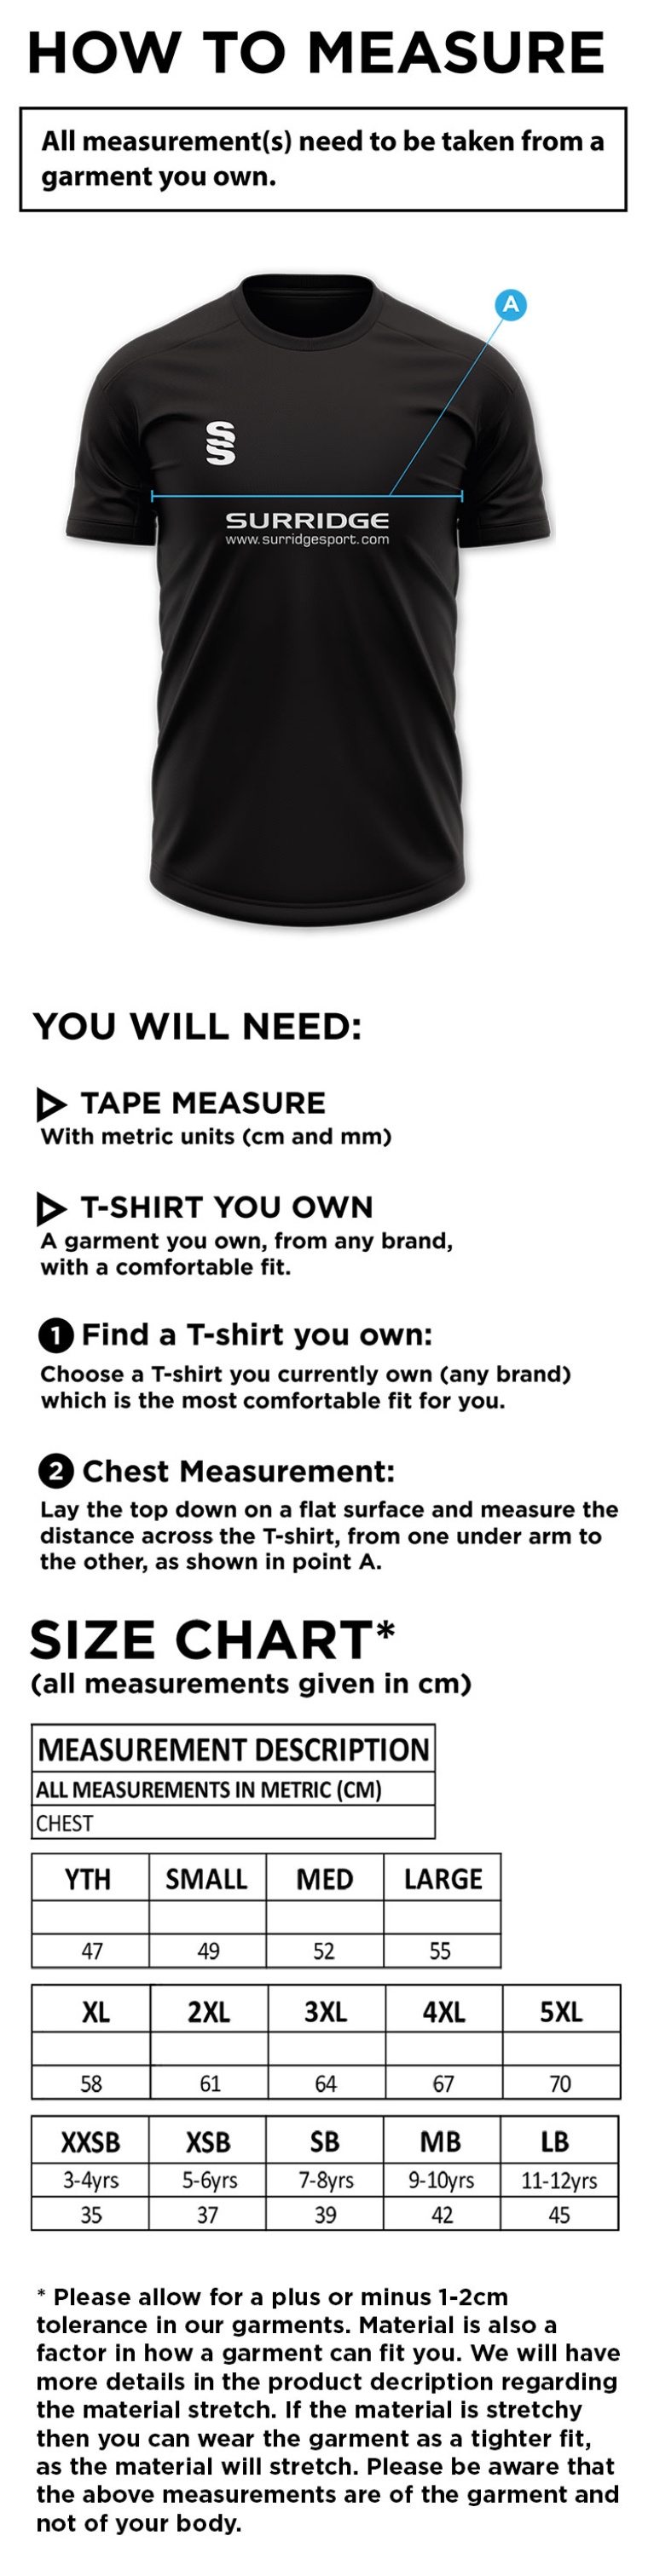 Women's Blade Polo Shirt : Navy / Bottle / Amber - Size Guide